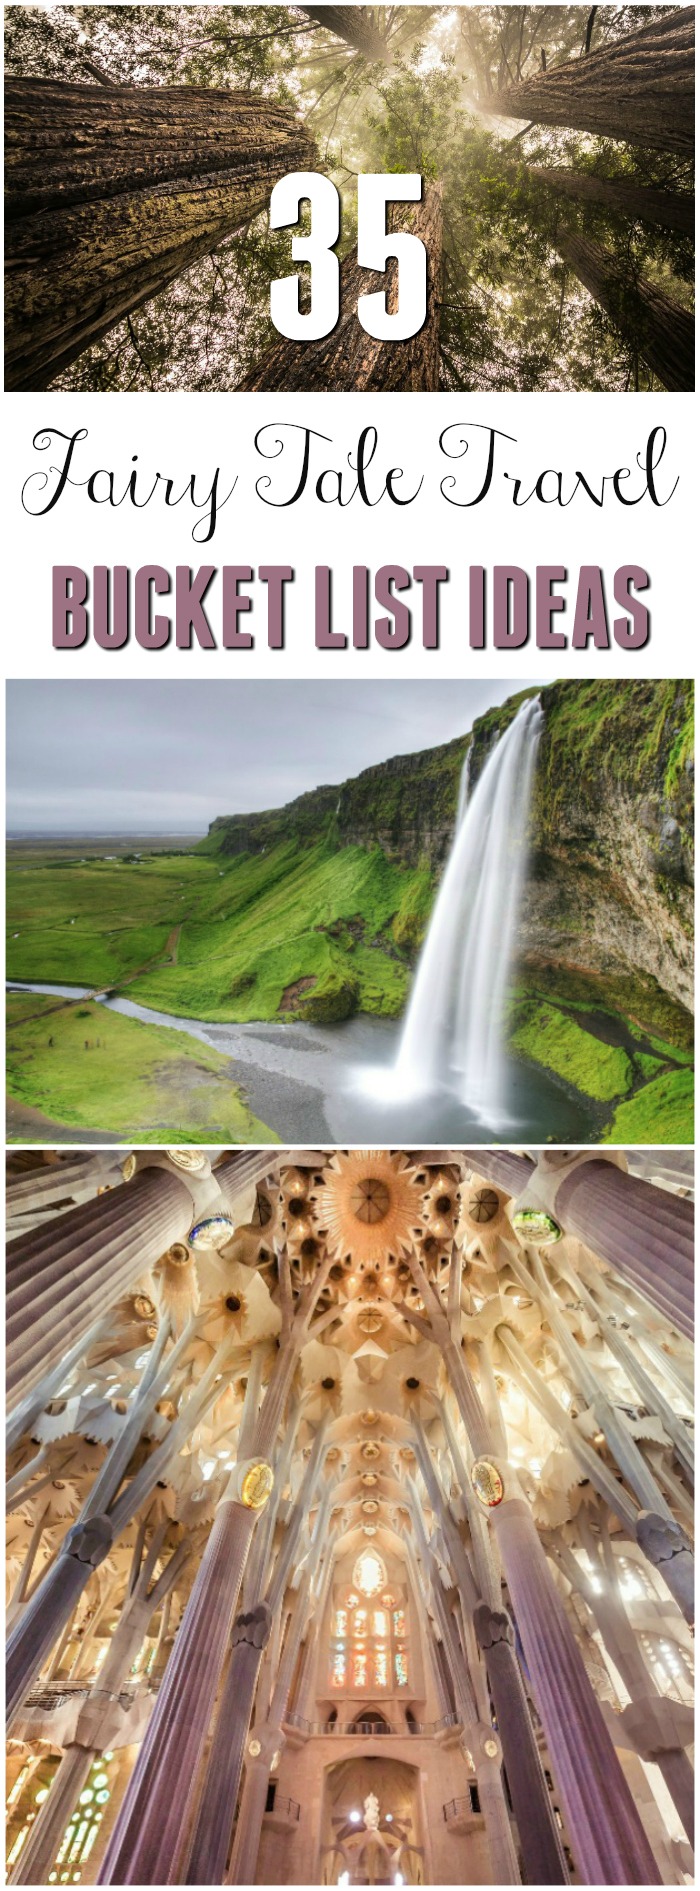 fairy tale travel, bucket list ideas